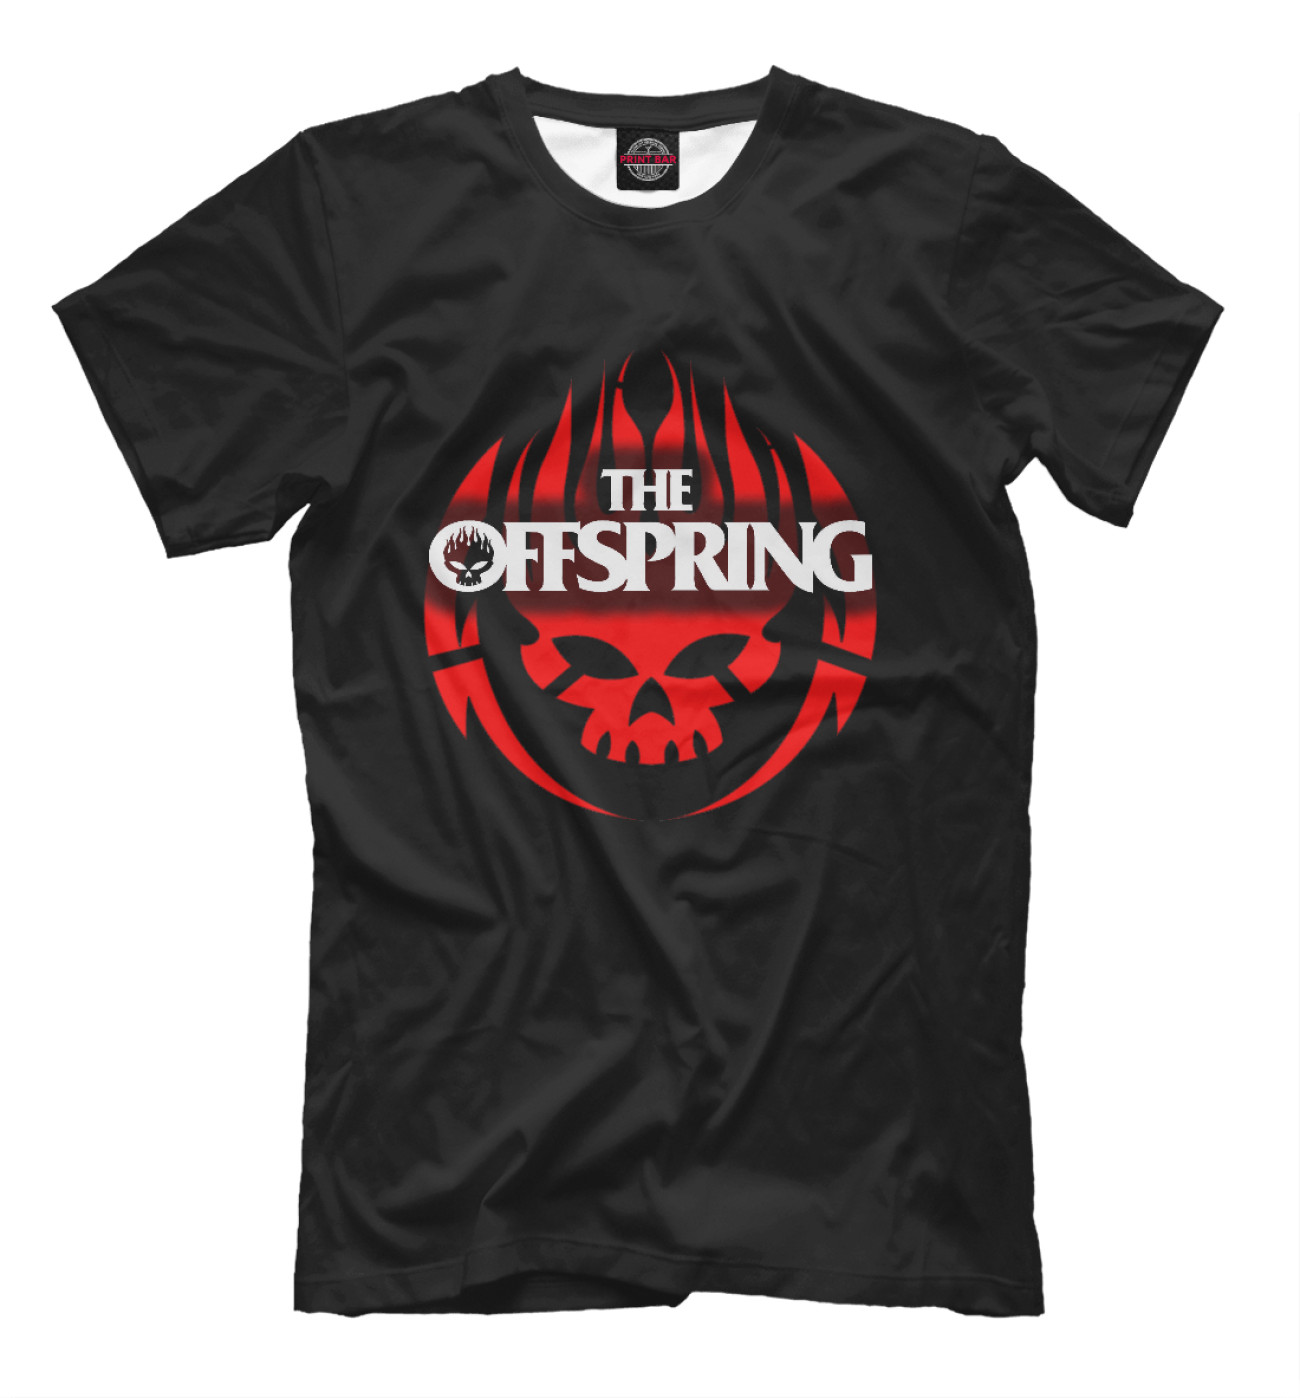 Мужская Футболка The Offspring, артикул: MZK-616914-fut-2